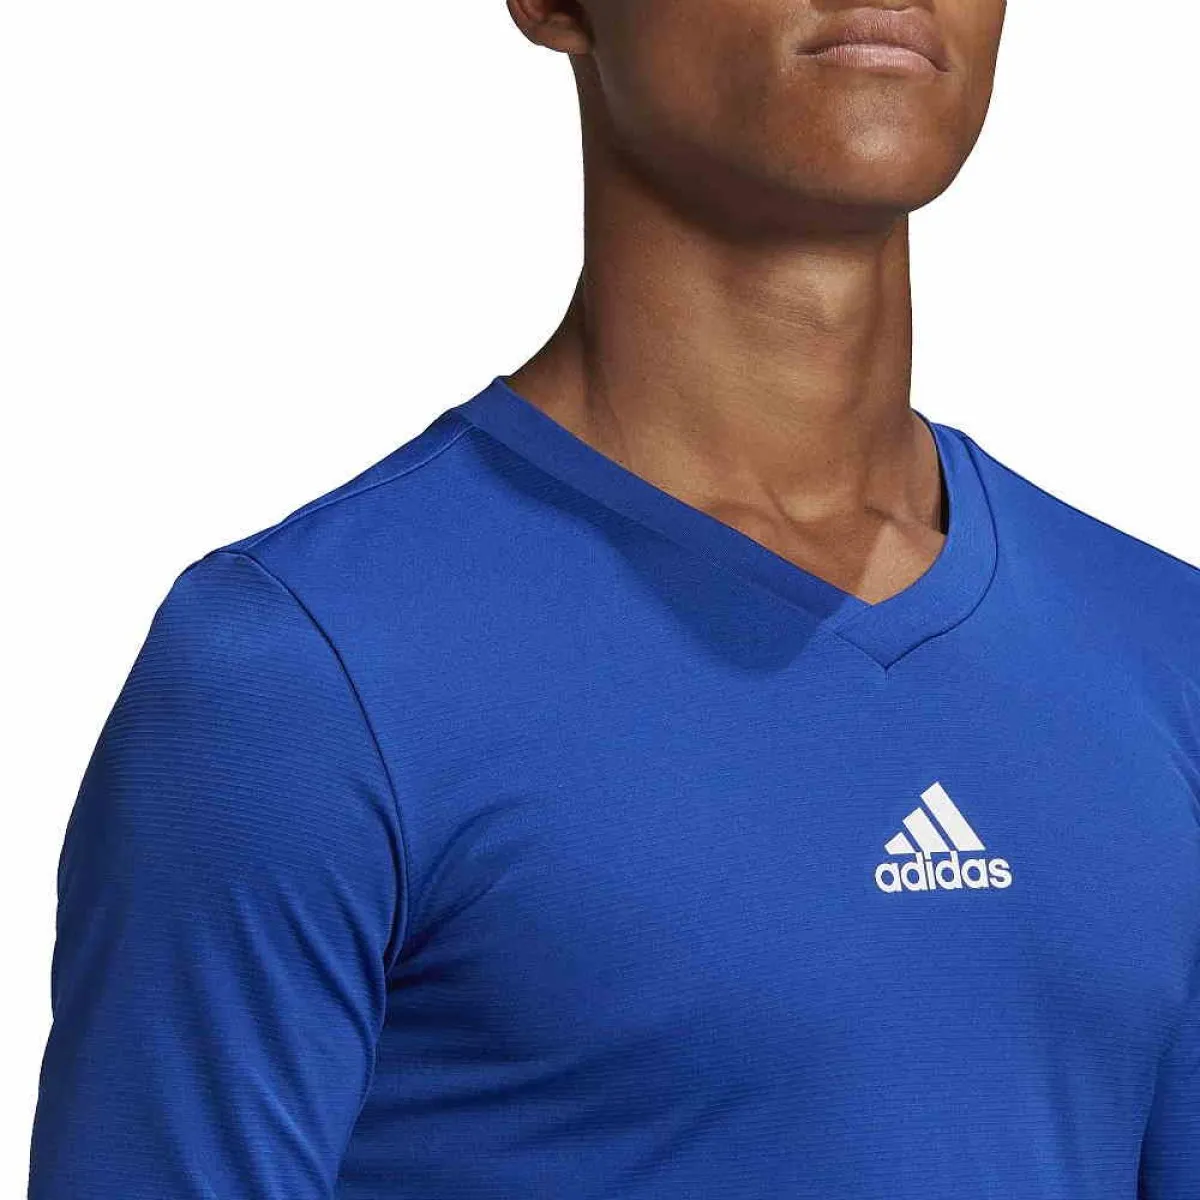 adidas Techfit T-Shirt long sleeve Team Base royal blue